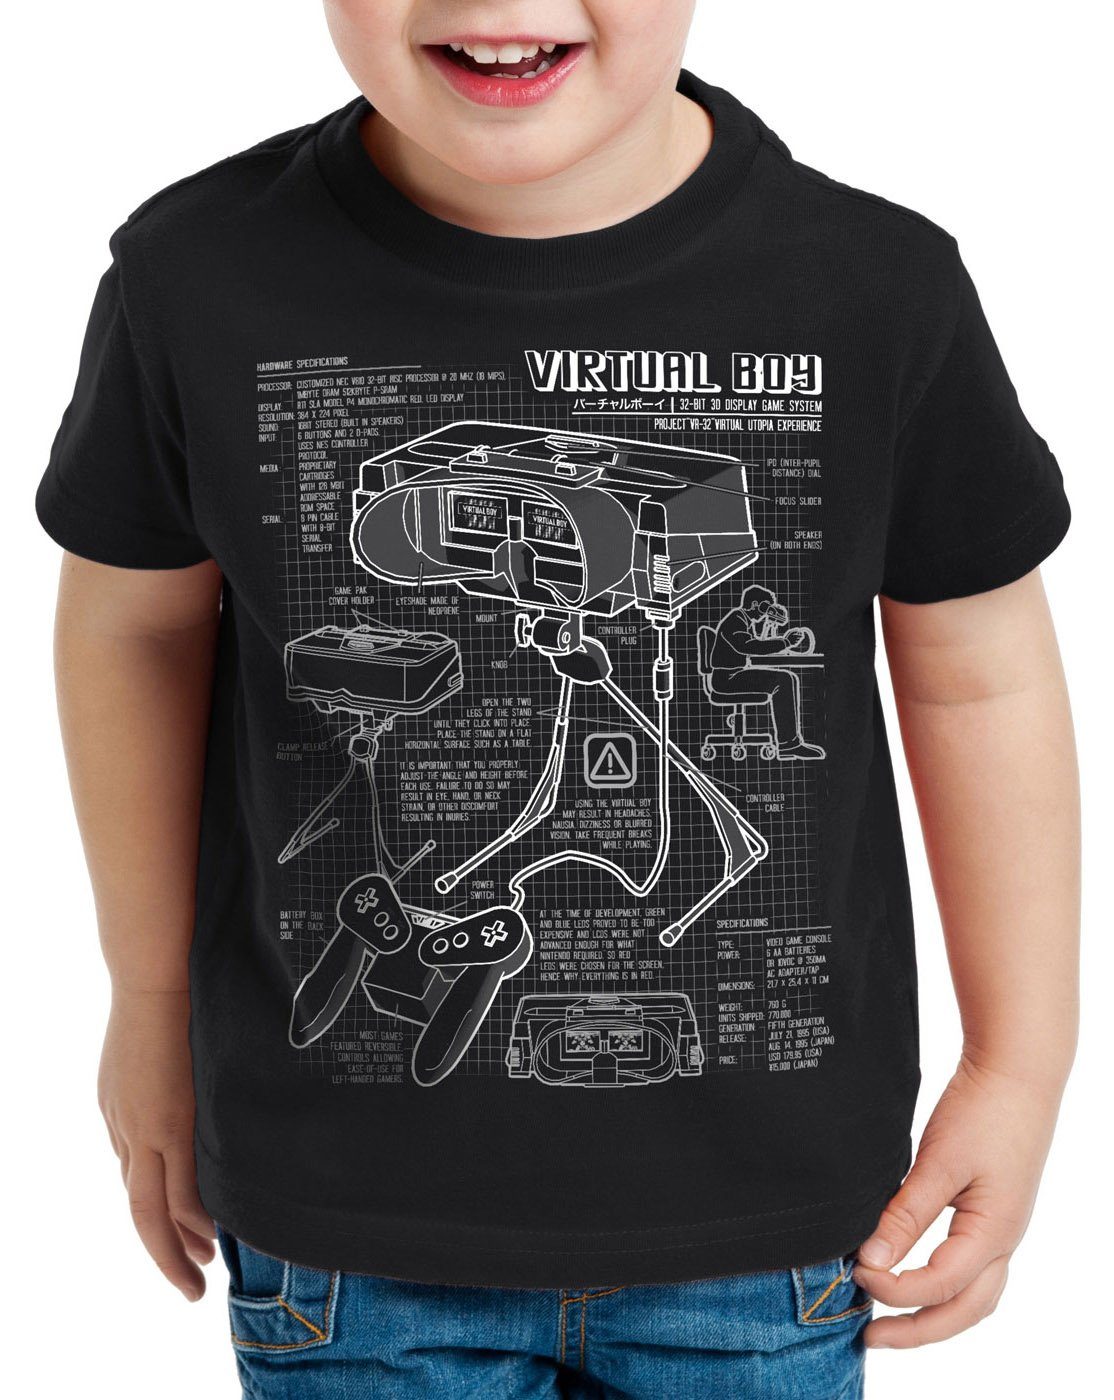 style3 Print-Shirt Kinder T-Shirt Virtual Boy Blaupause 32-Bit videospiel controller schwarz